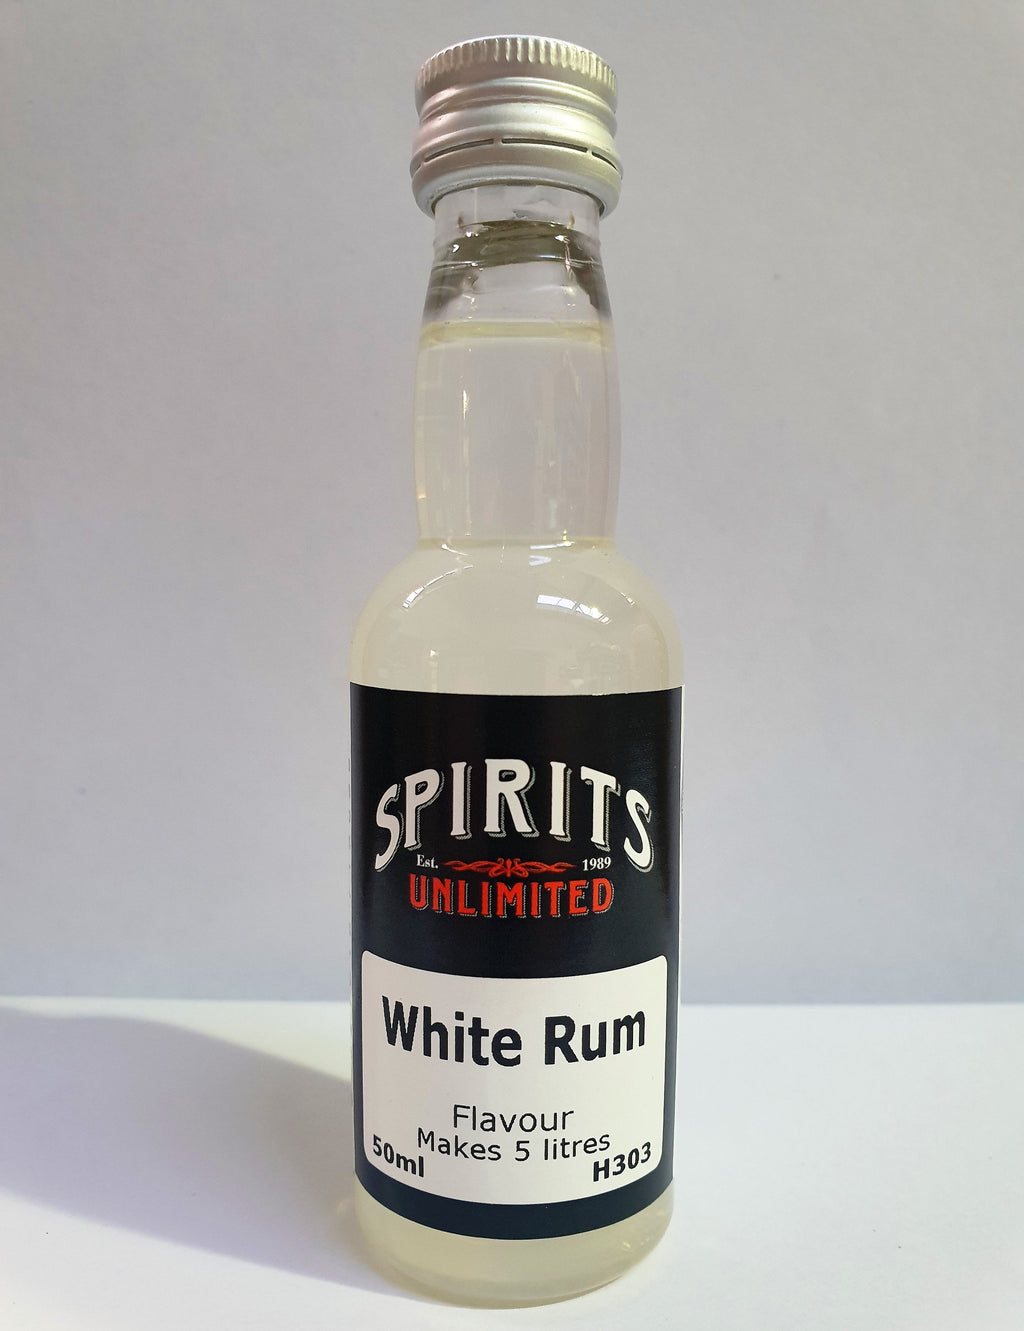 Spirits Unlimited White Rum (H303)